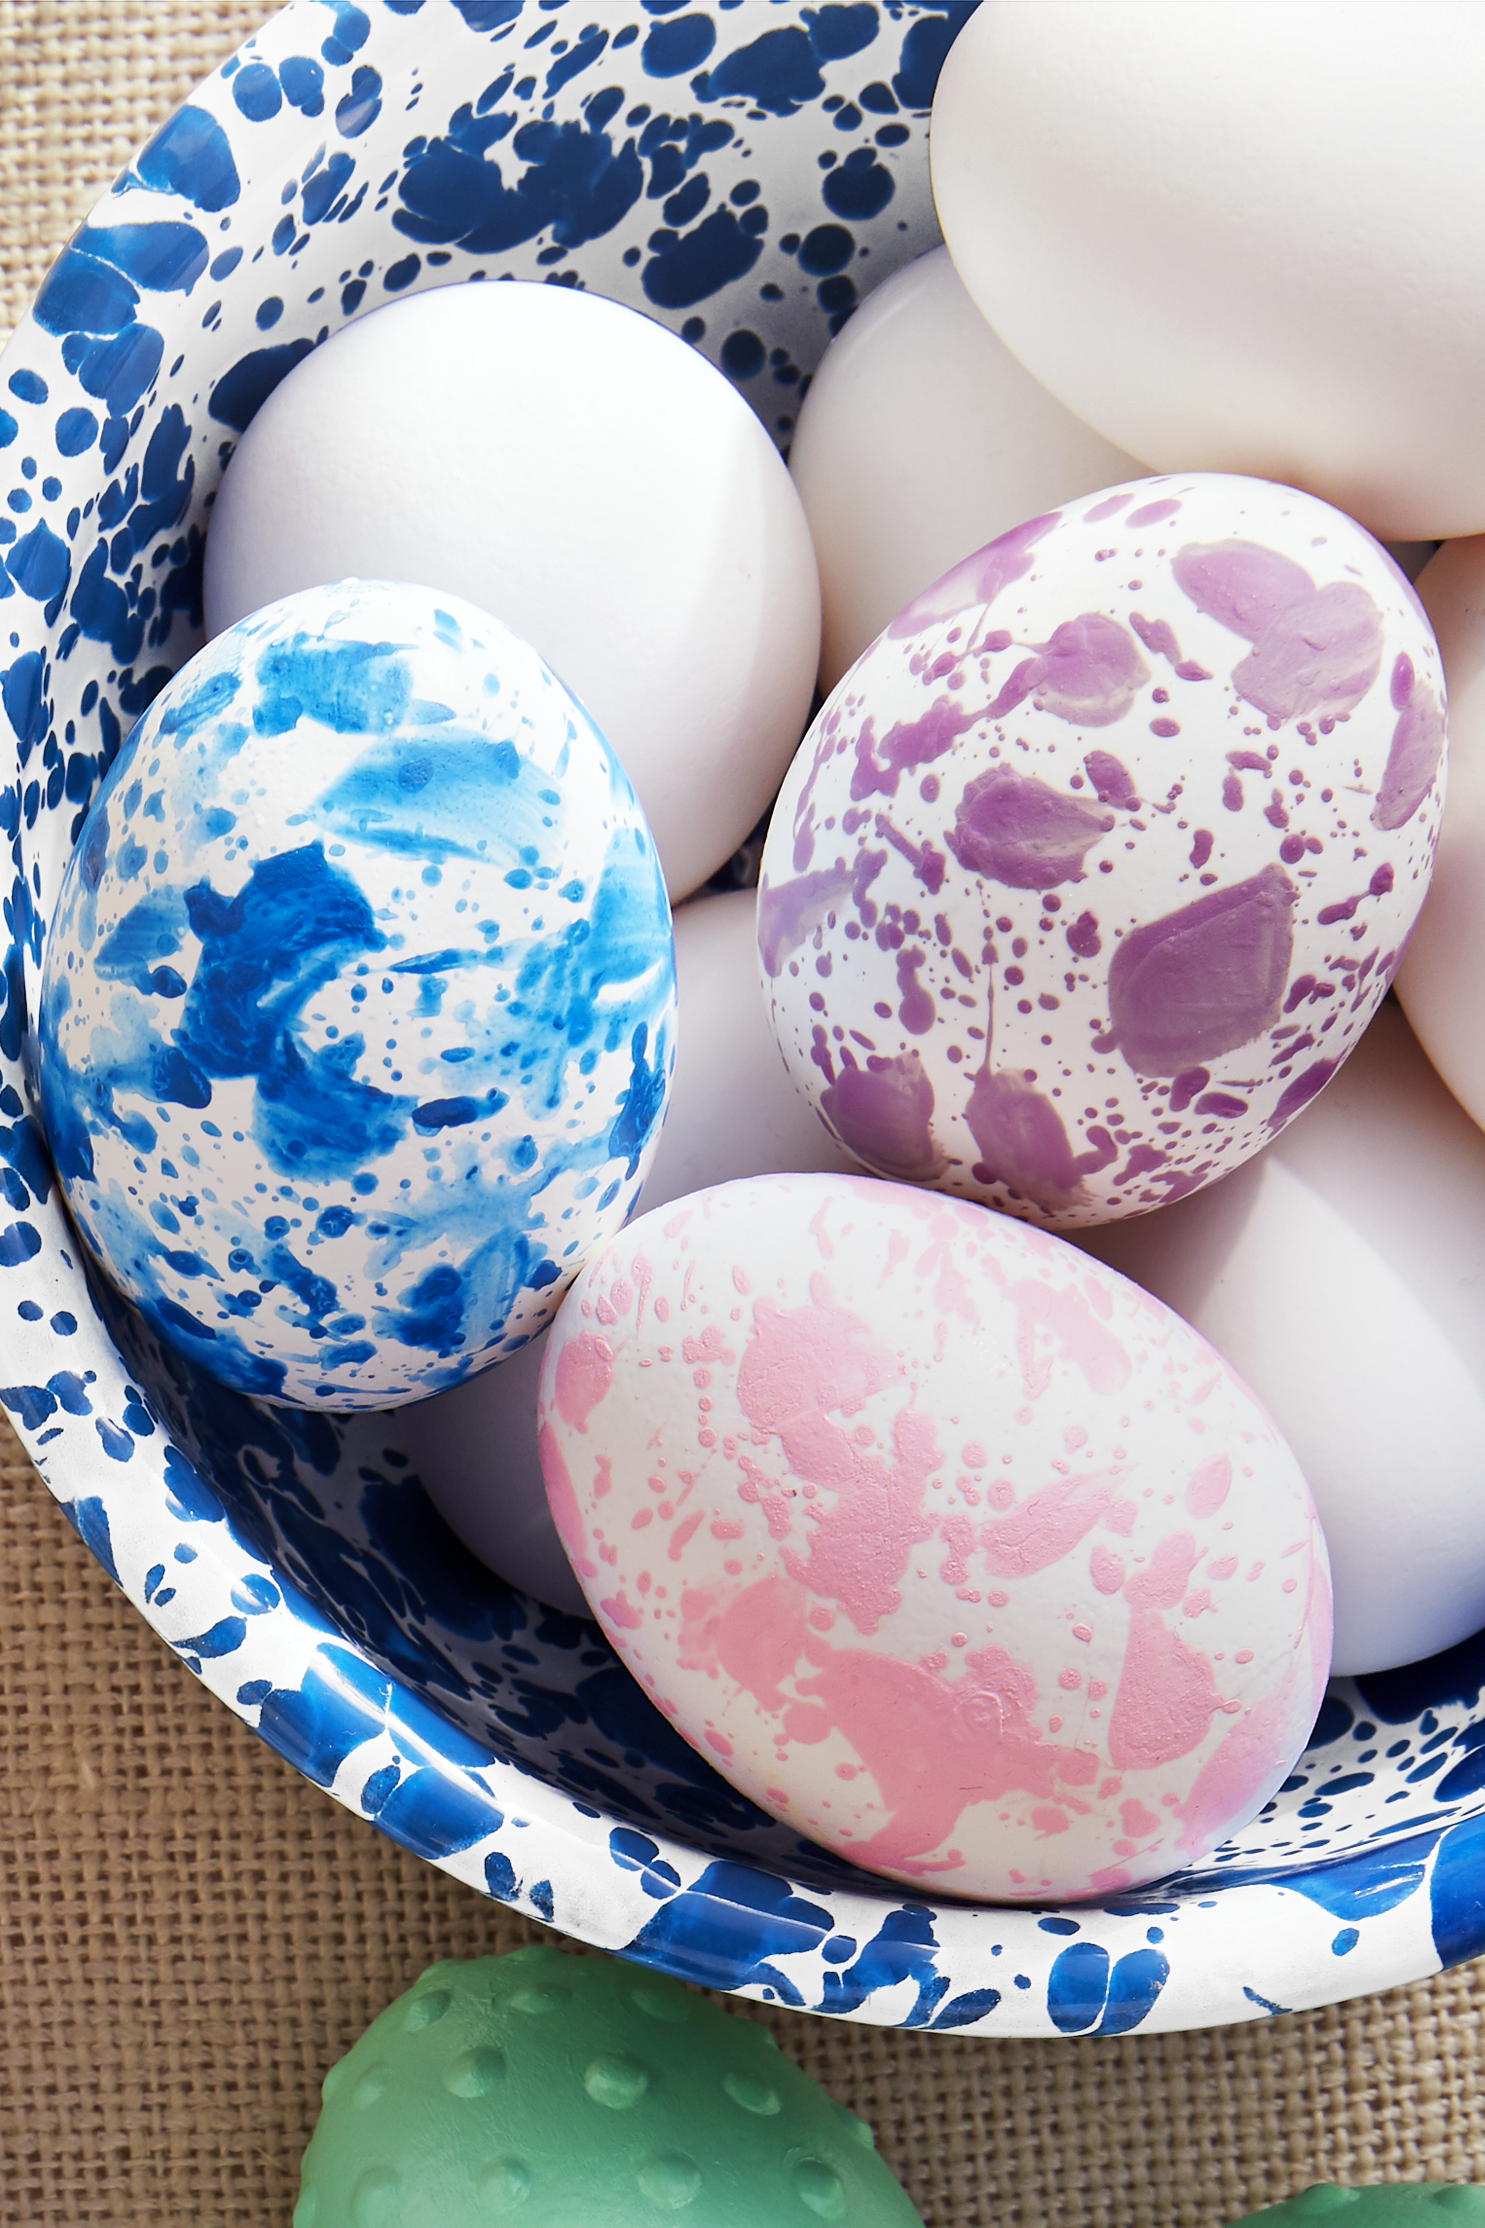 60+ Fun Easter Egg Designs - Creative Ideas for Easter Egg ...